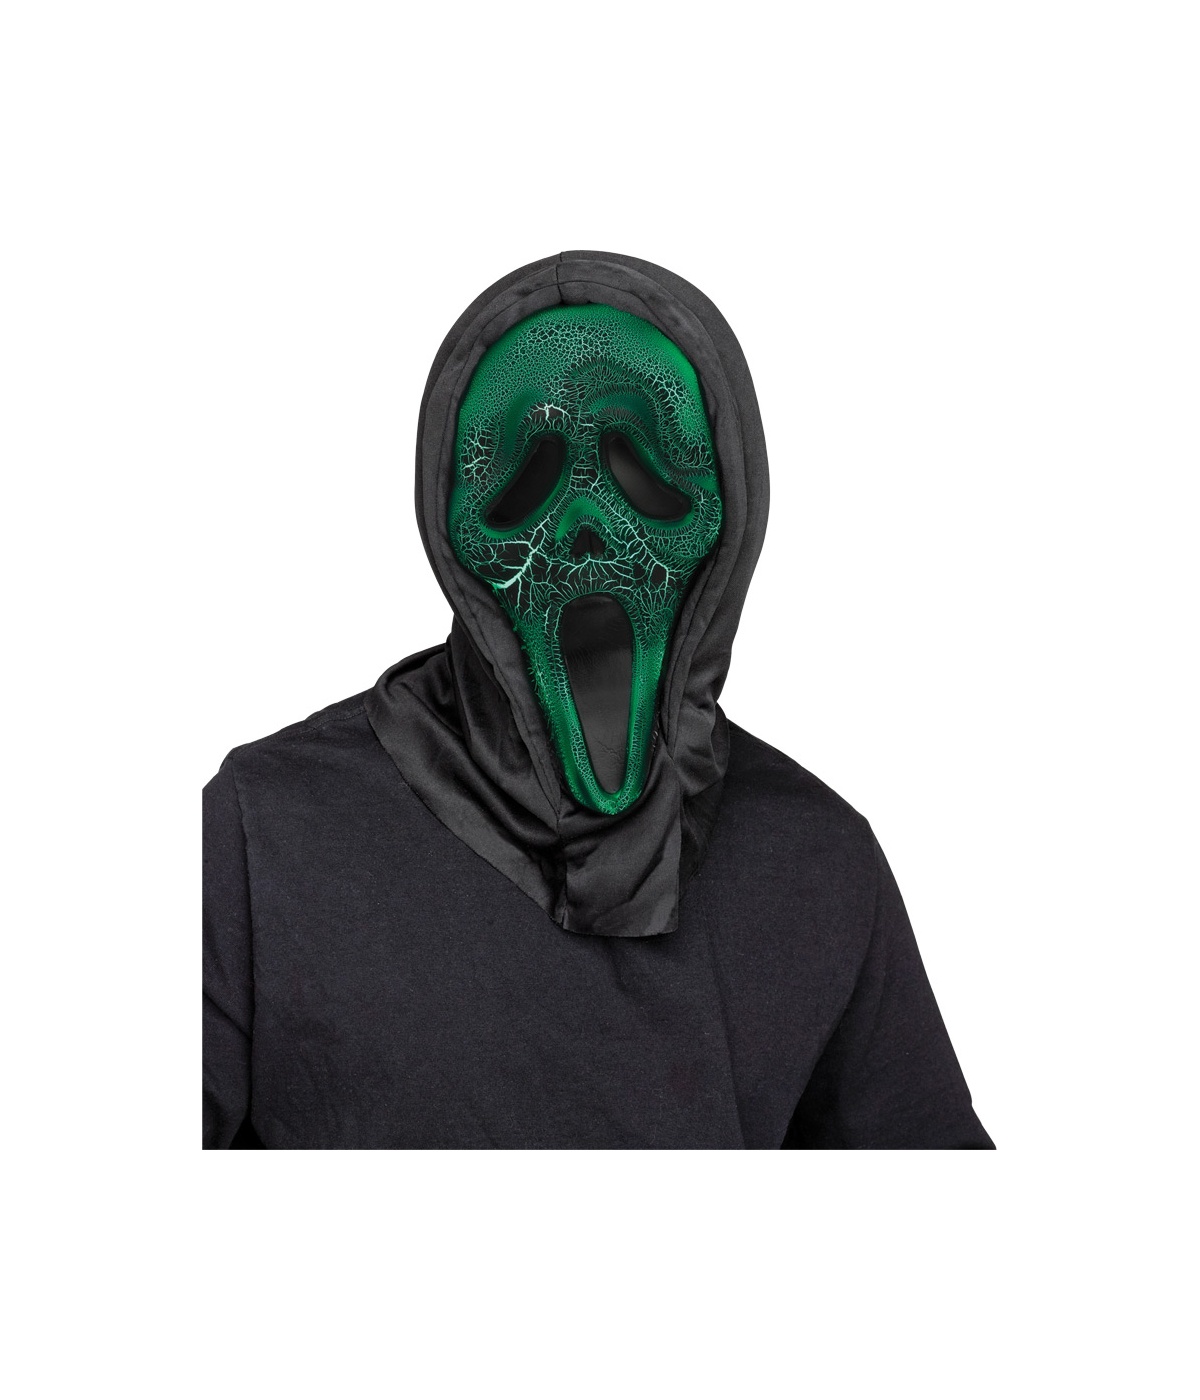  Smoldering Ghost Face Mask